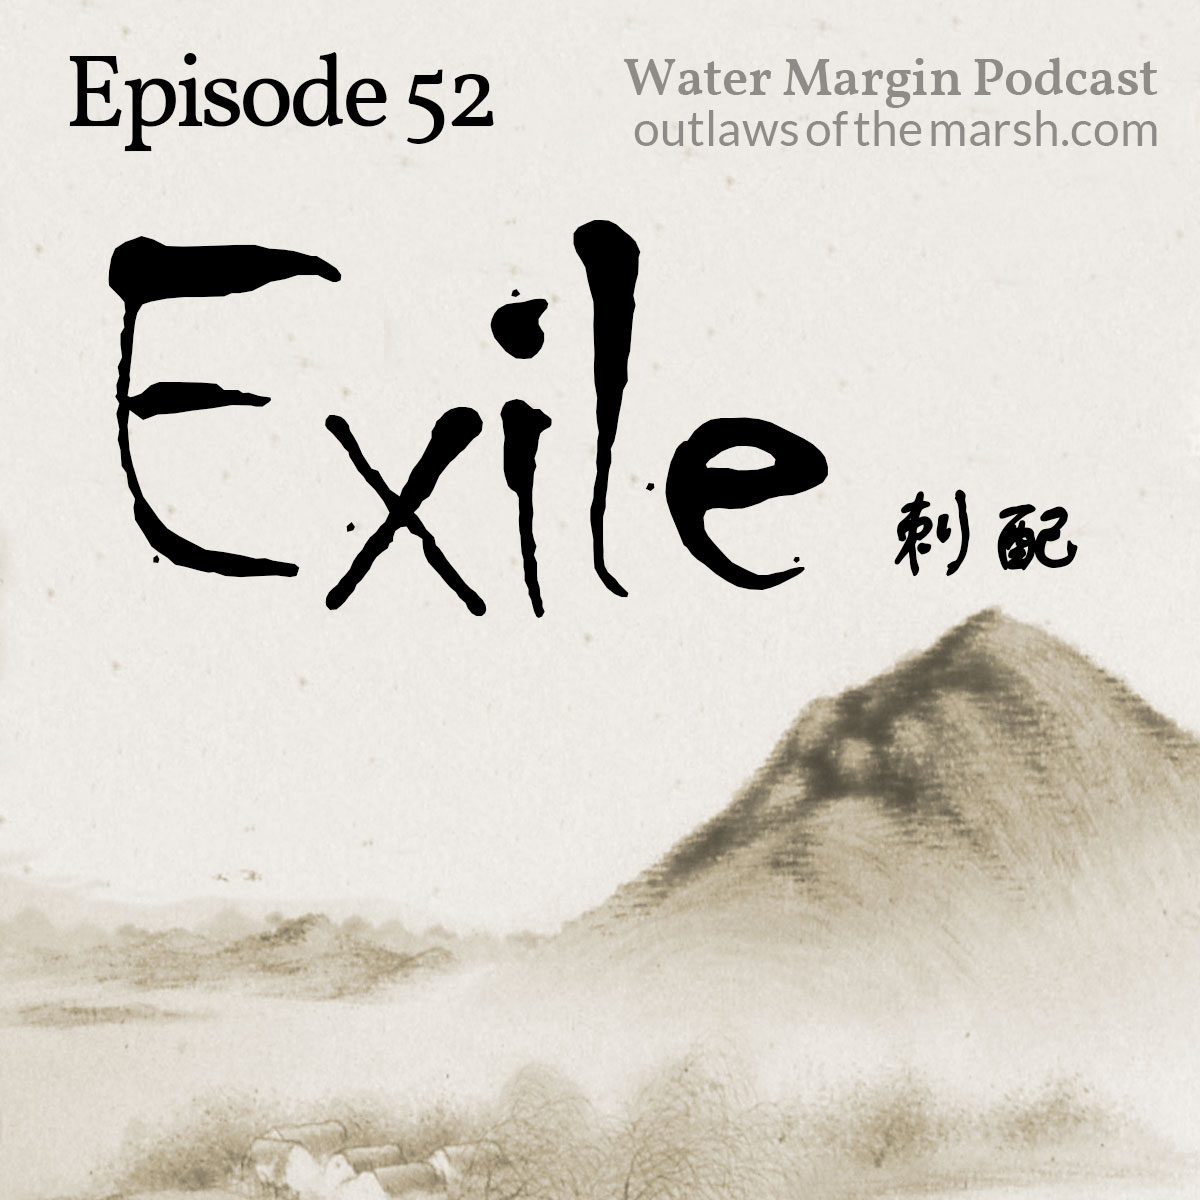 Water Margin Podcast: Episode 052